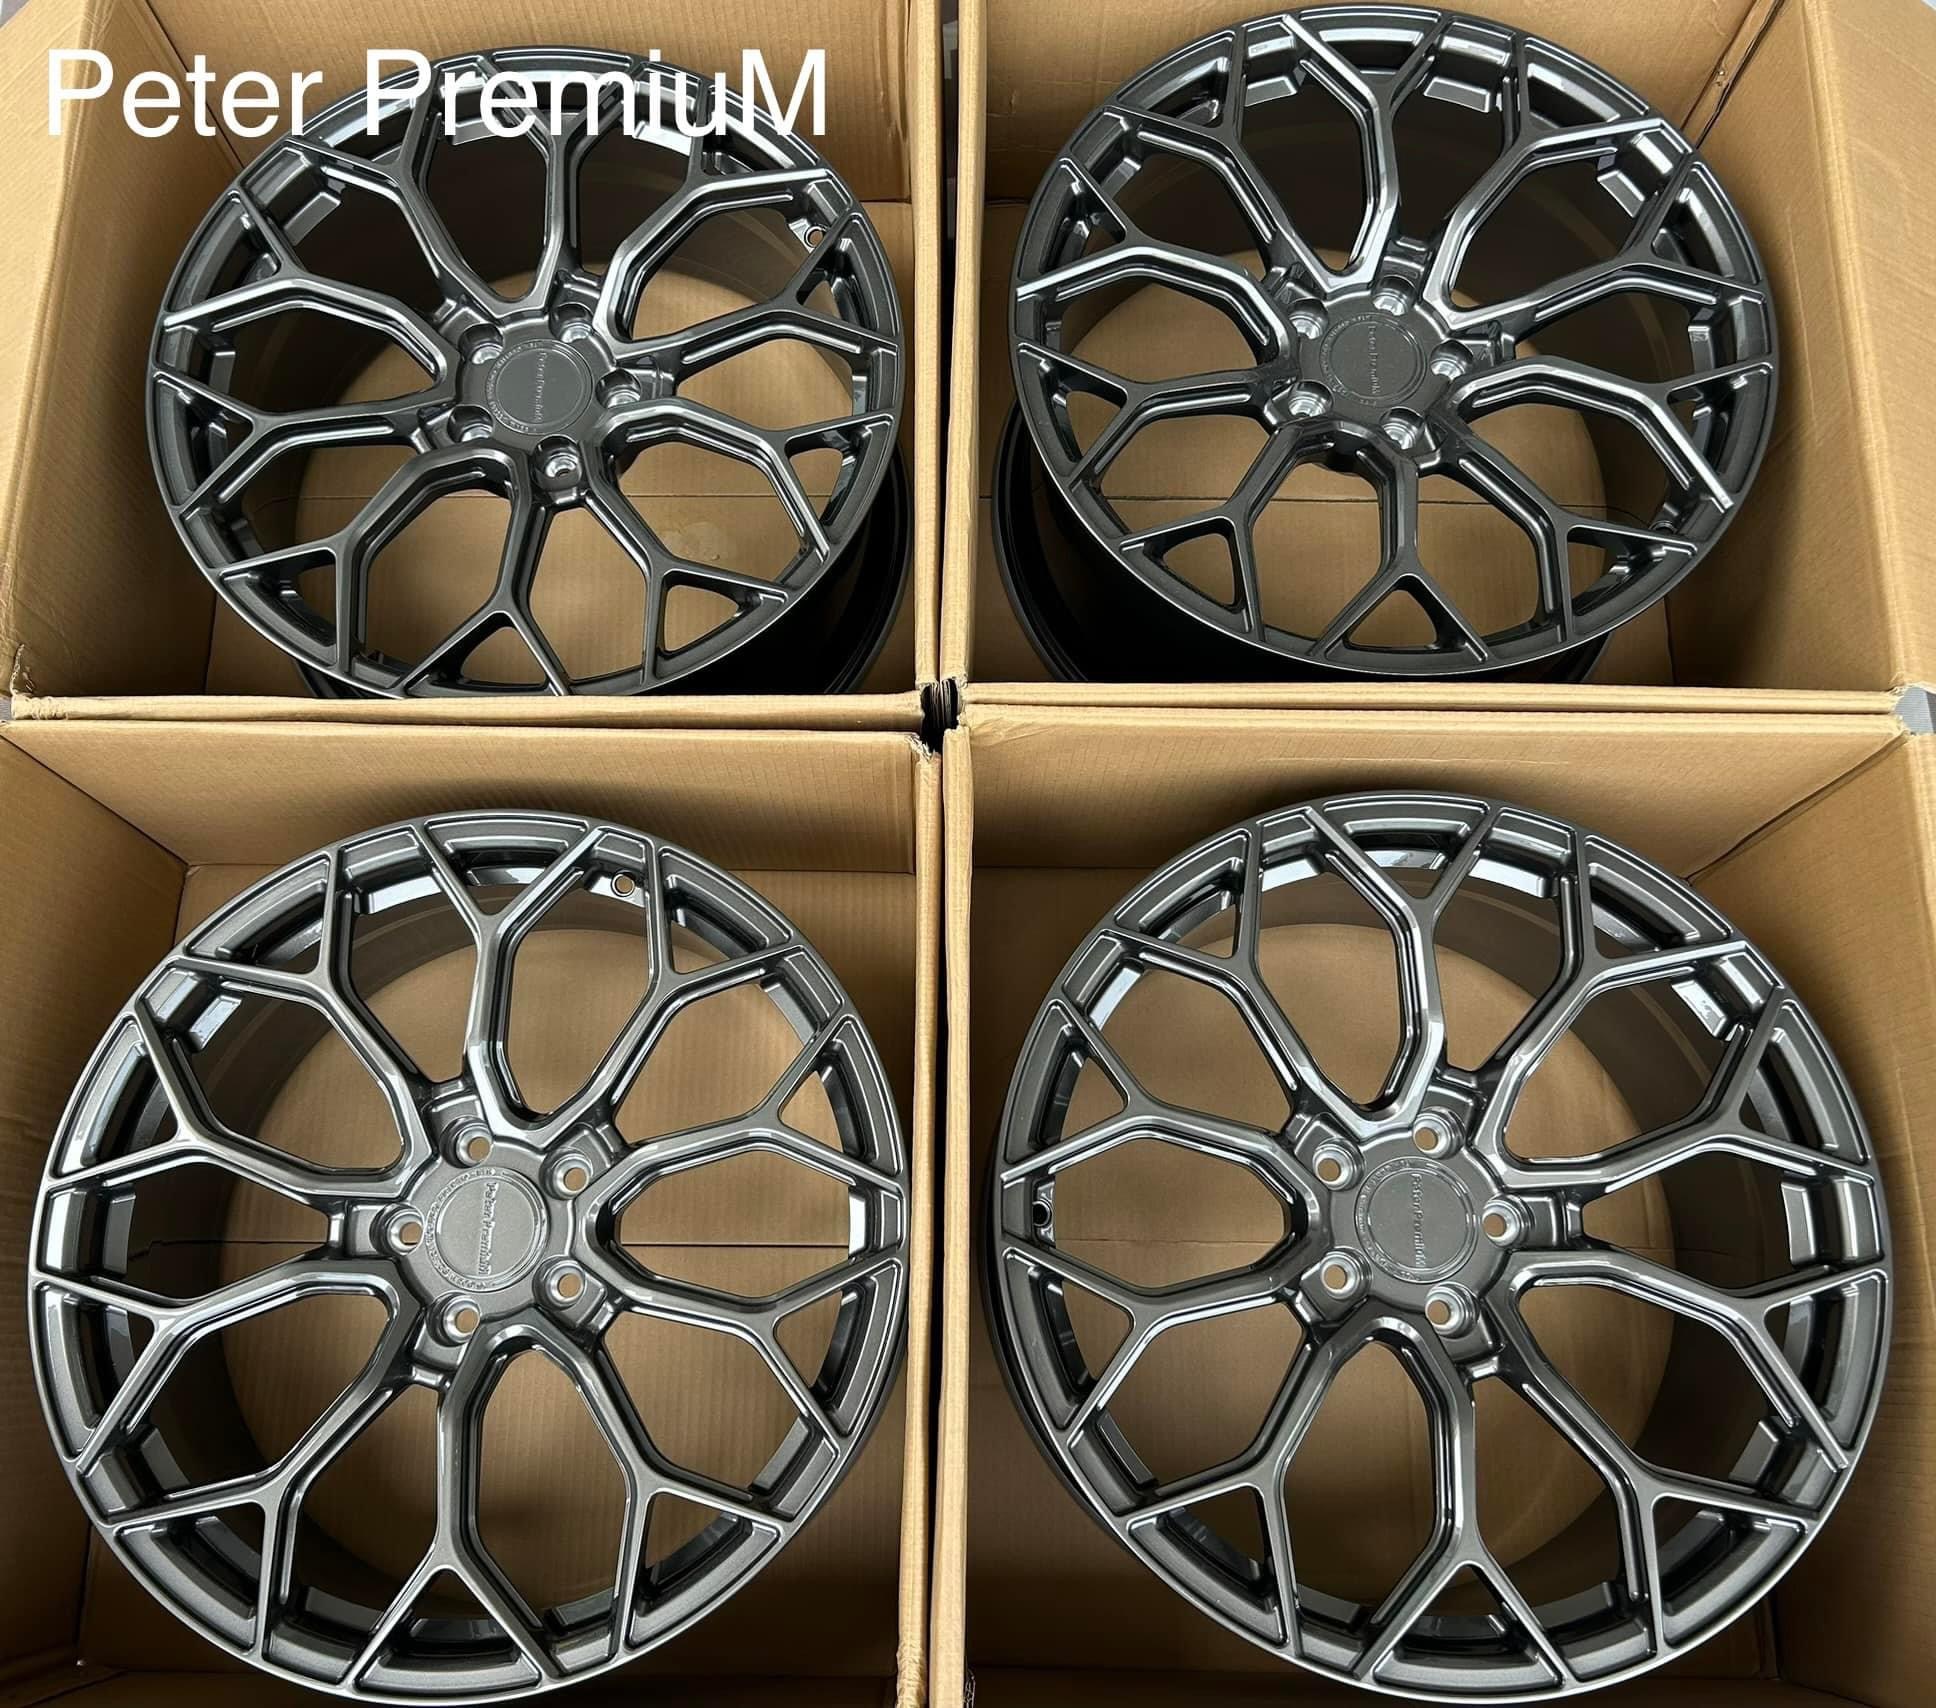 Peter PremiuM - High Quality Custom Forged Wheels (ผลิตและจำหน่าย) Model - PPM F101